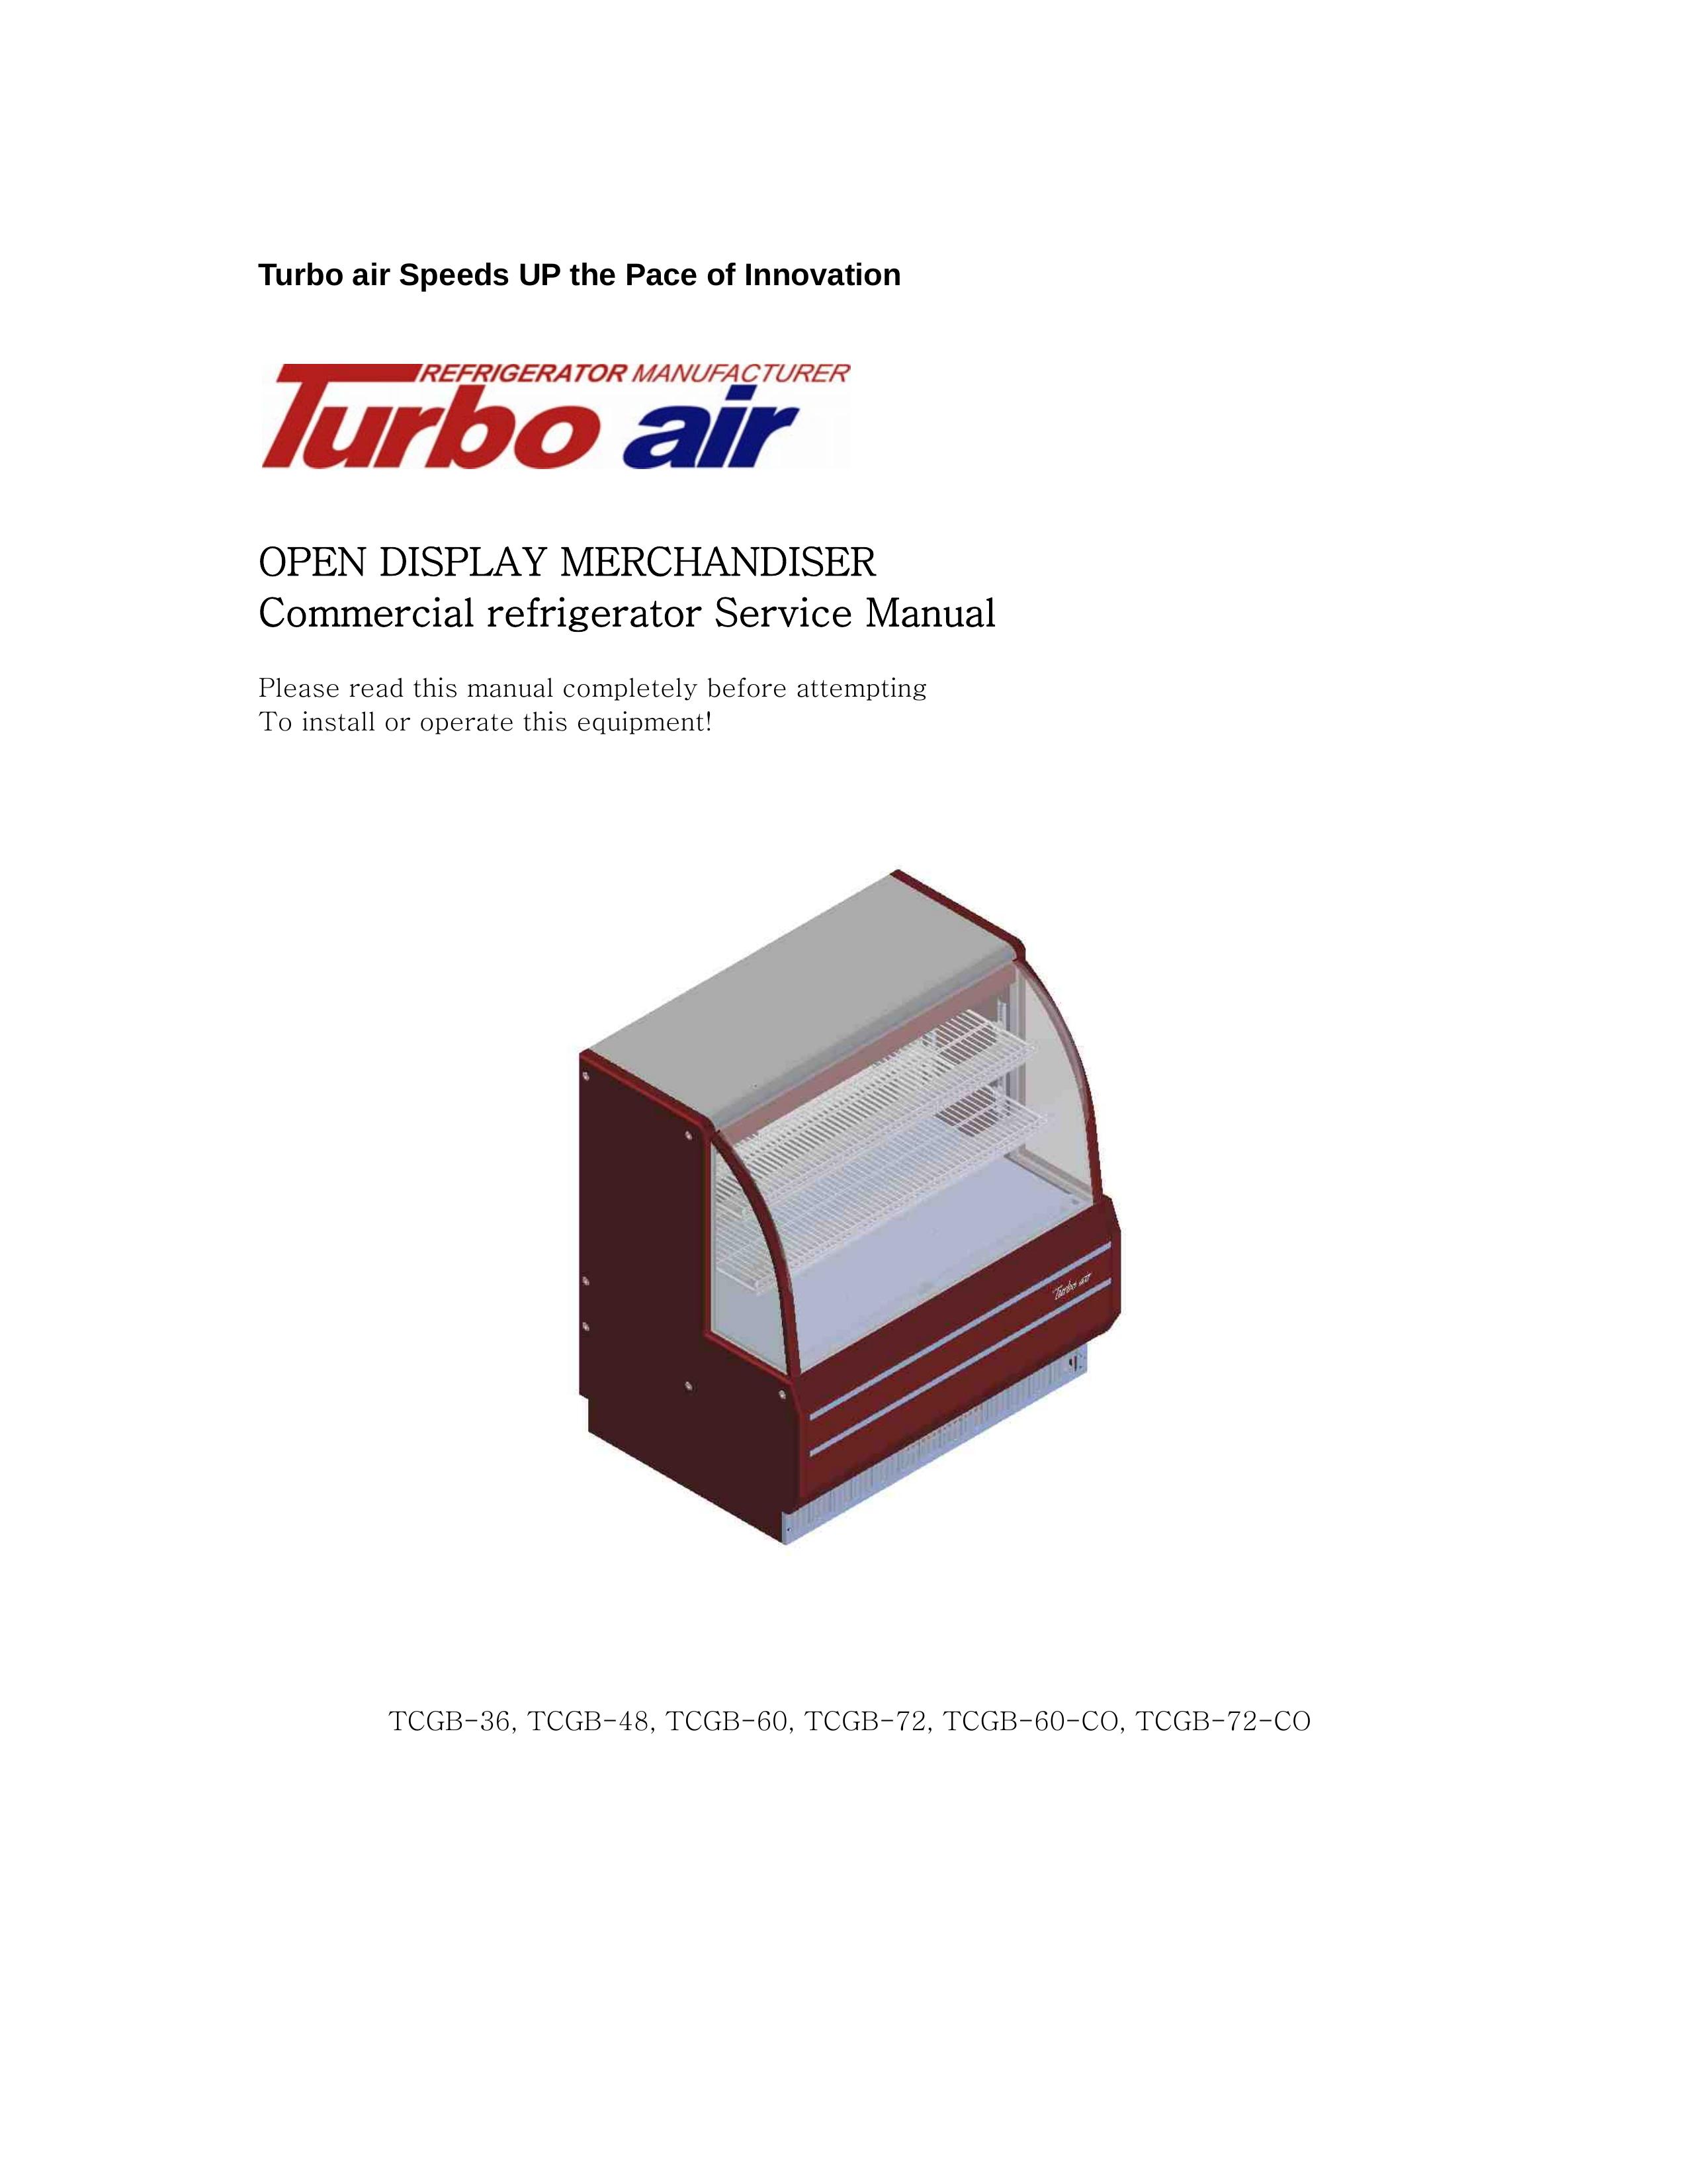 Turbo Air TCGB-60-CO Refrigerator User Manual